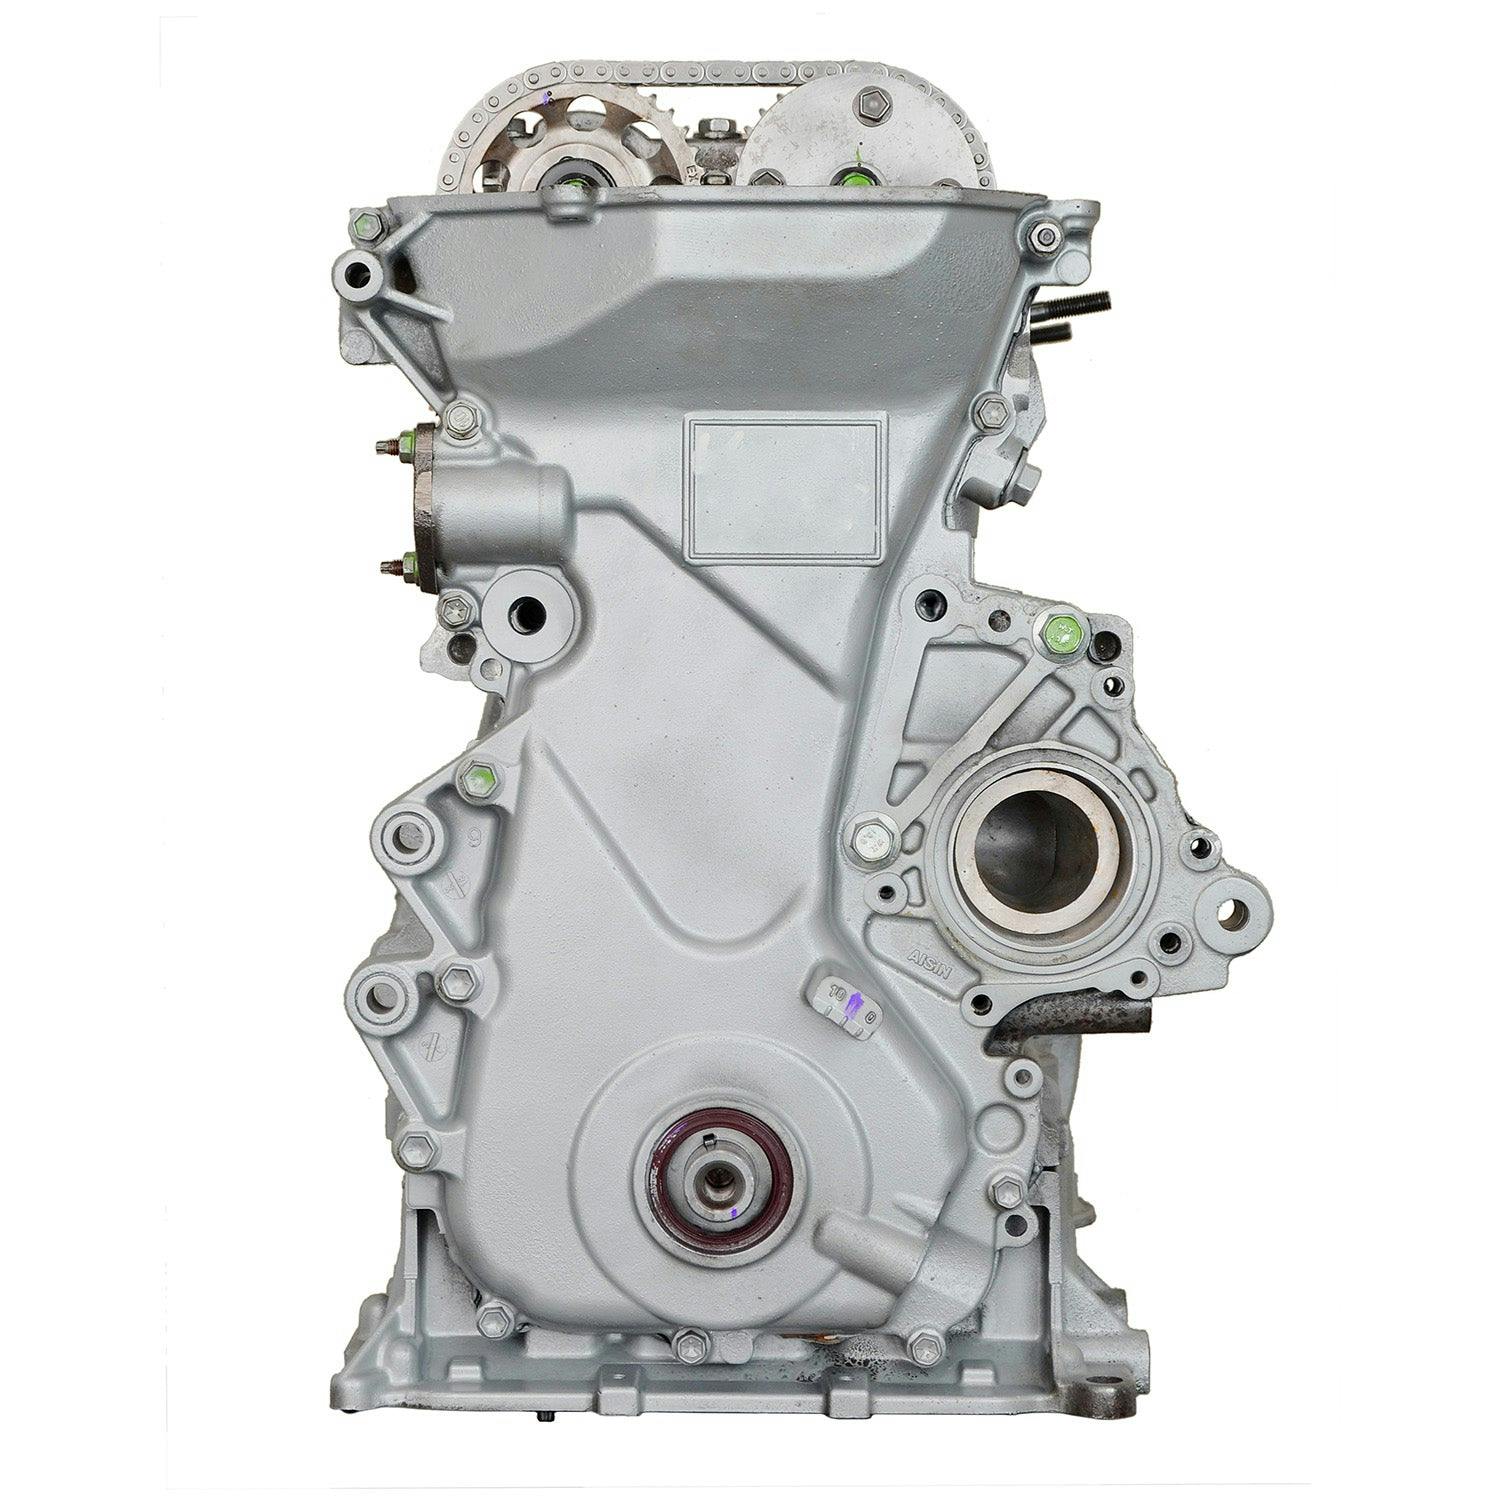 1.8L Inline-4 Engine for 2000-2005 Toyota Celica/MR2 Spyder FWD/RWD